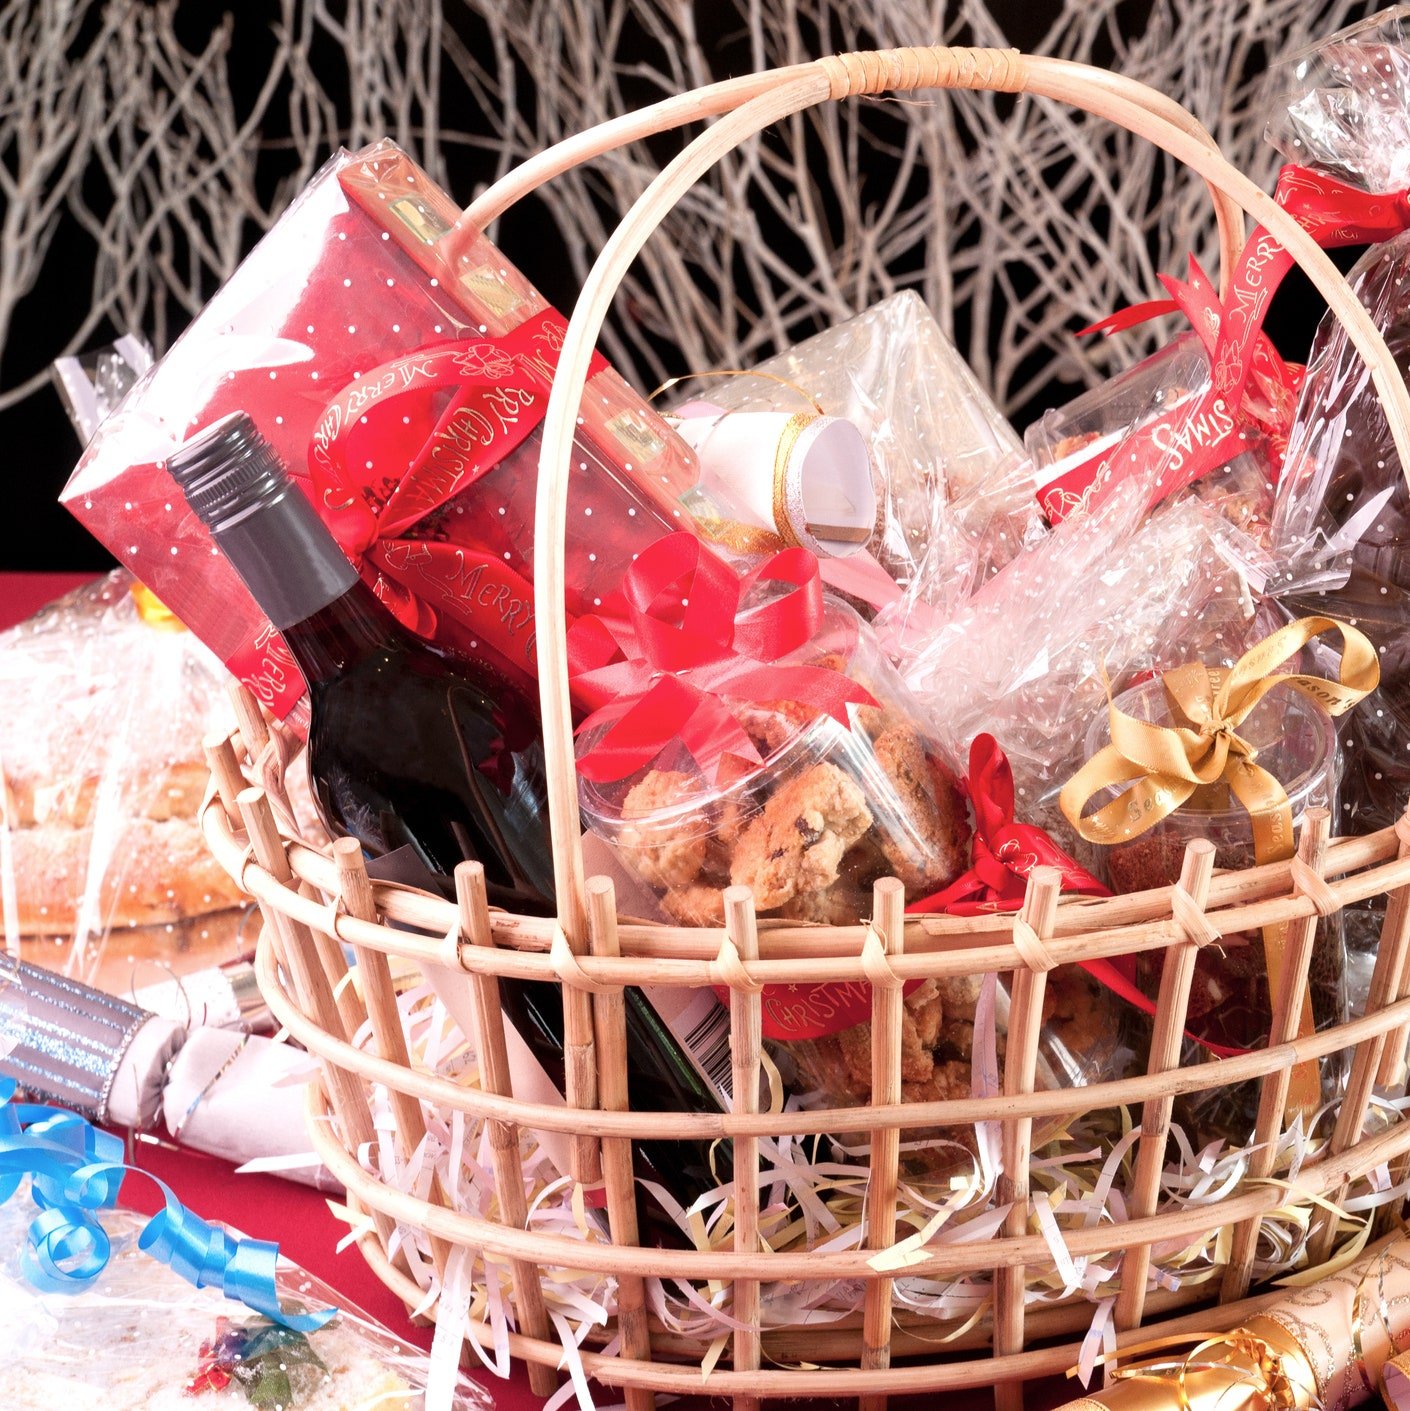 5 Fancy Italian Food Gift Baskets for Christmas